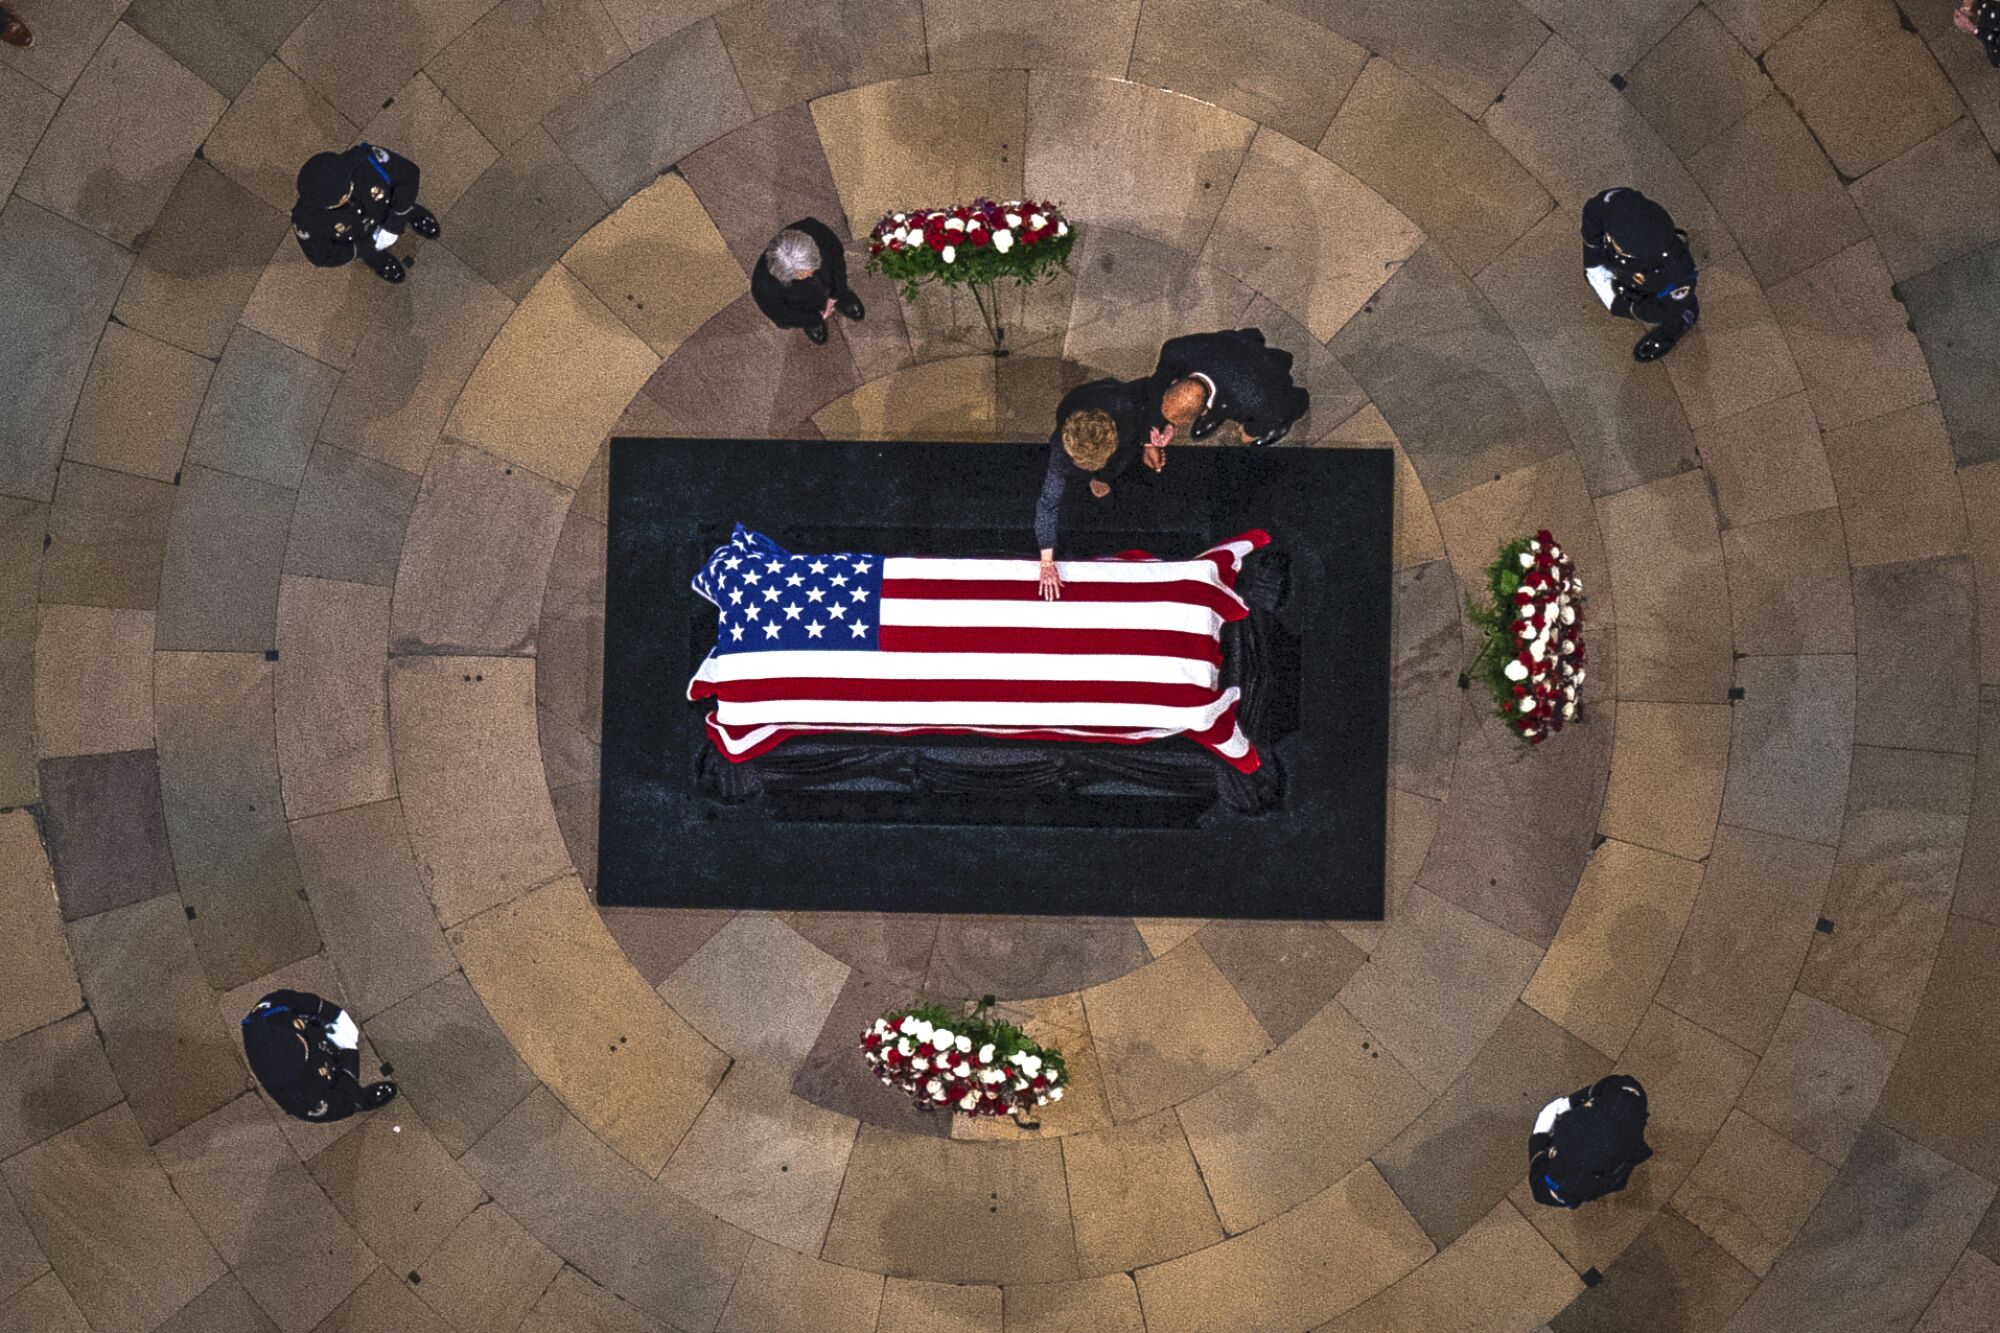 Elizabeth Dole touches the casket of her husband, Bob Dole, lying in the U.S. Capitol Rotunda.